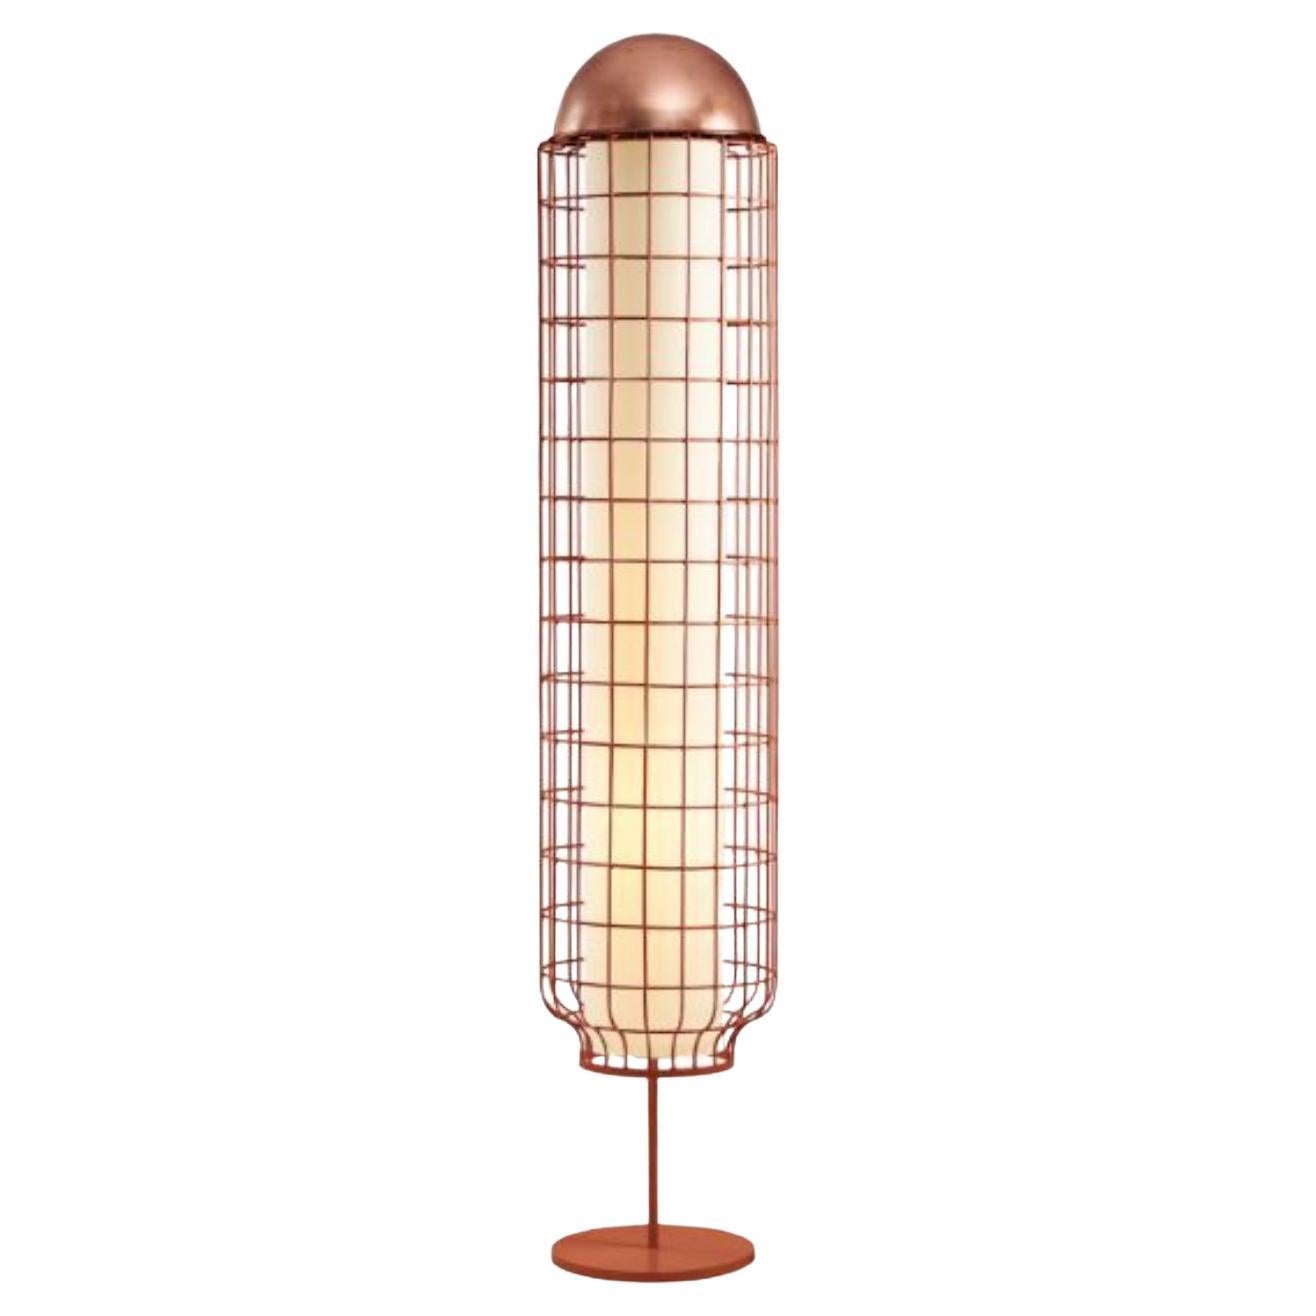 Copper Magnolia Floor Lamp by Dooq